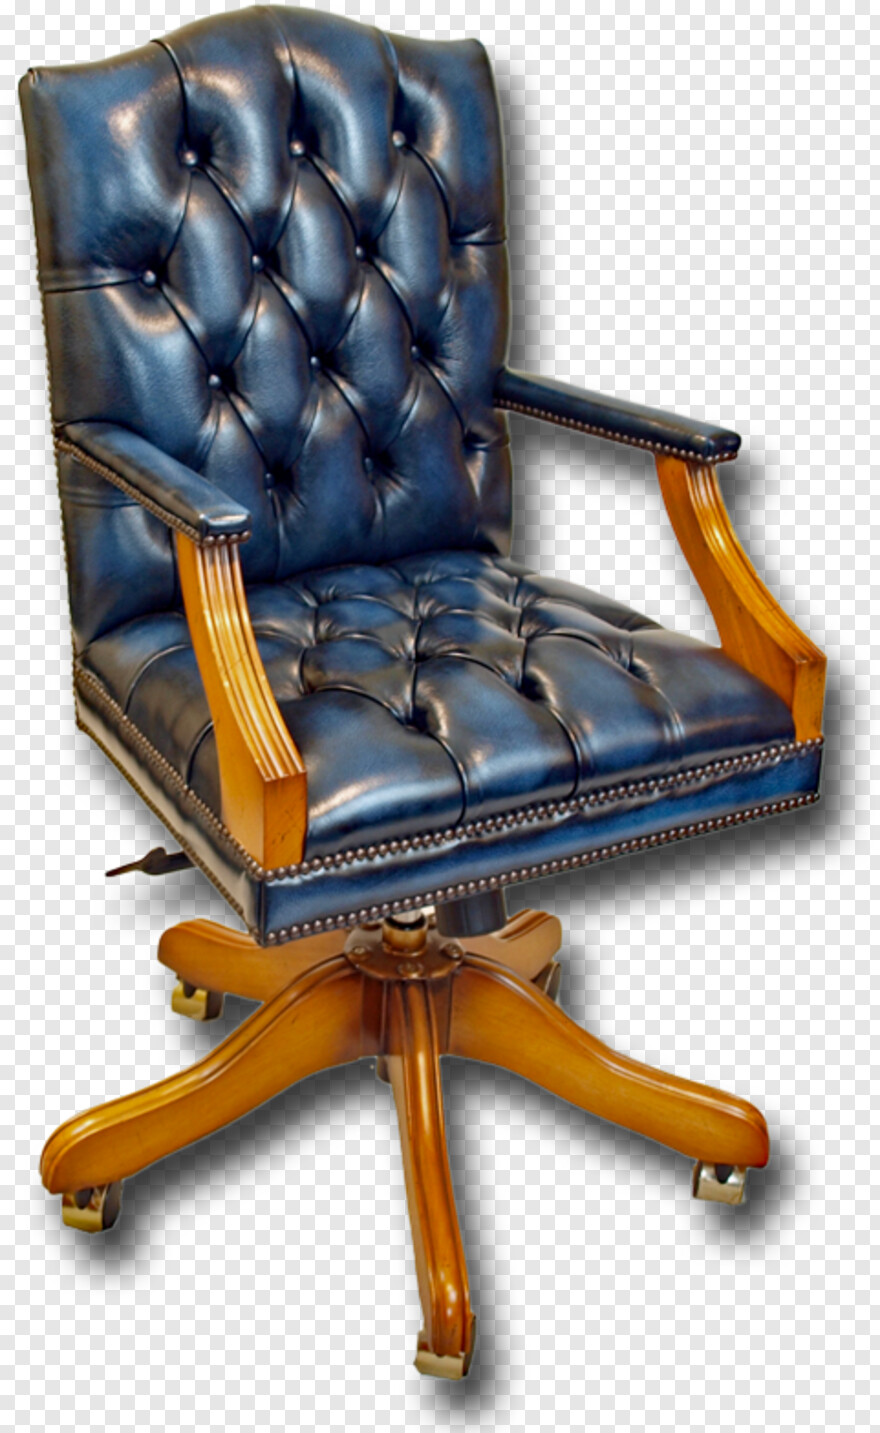  Office Chair, Beach Chair, Person Sitting In Chair, Chair, Folding Chair, King Chair